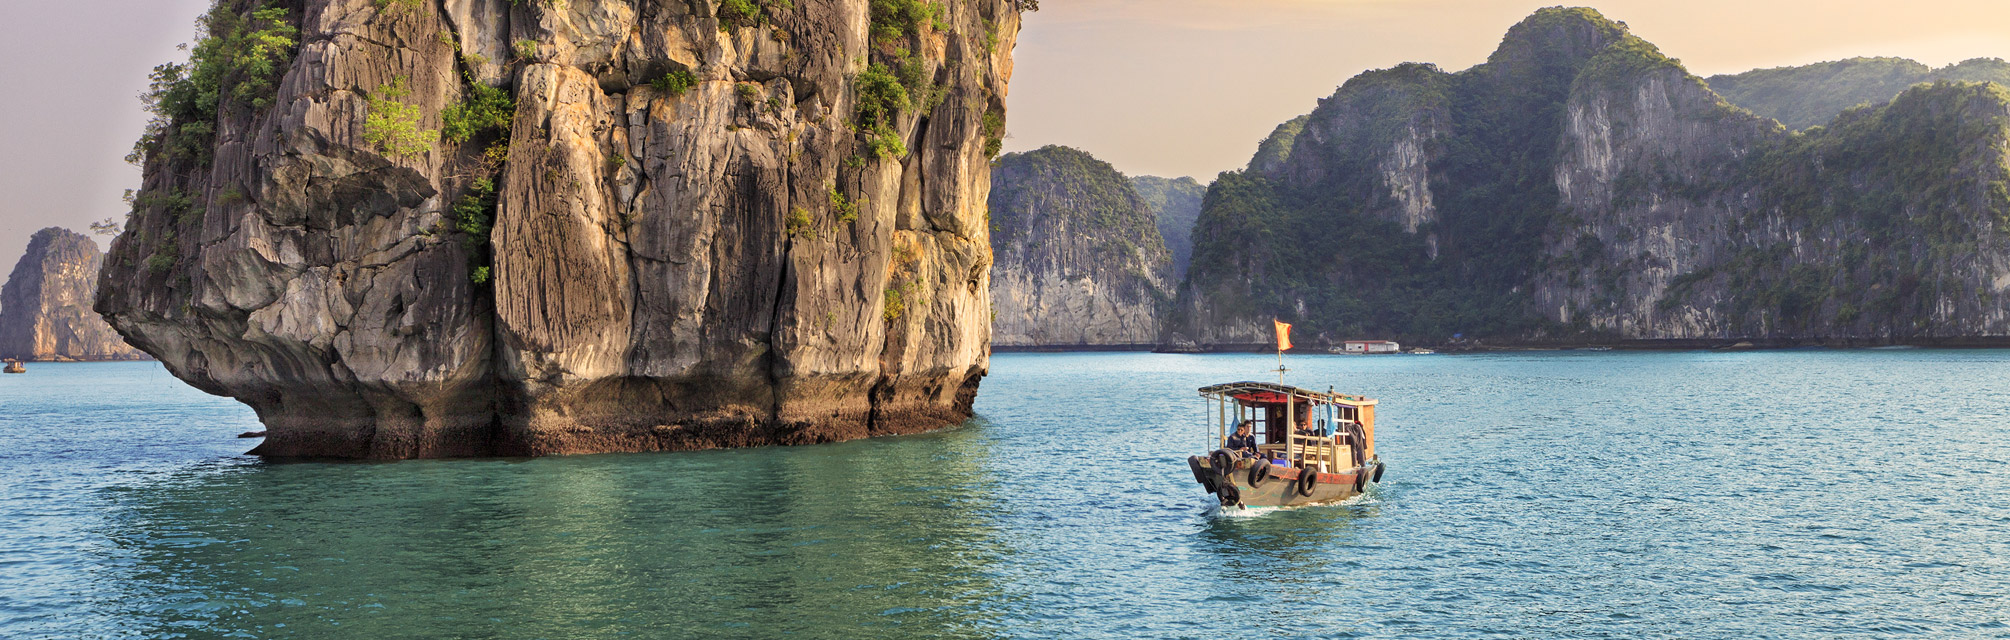 vietnam luxury travel